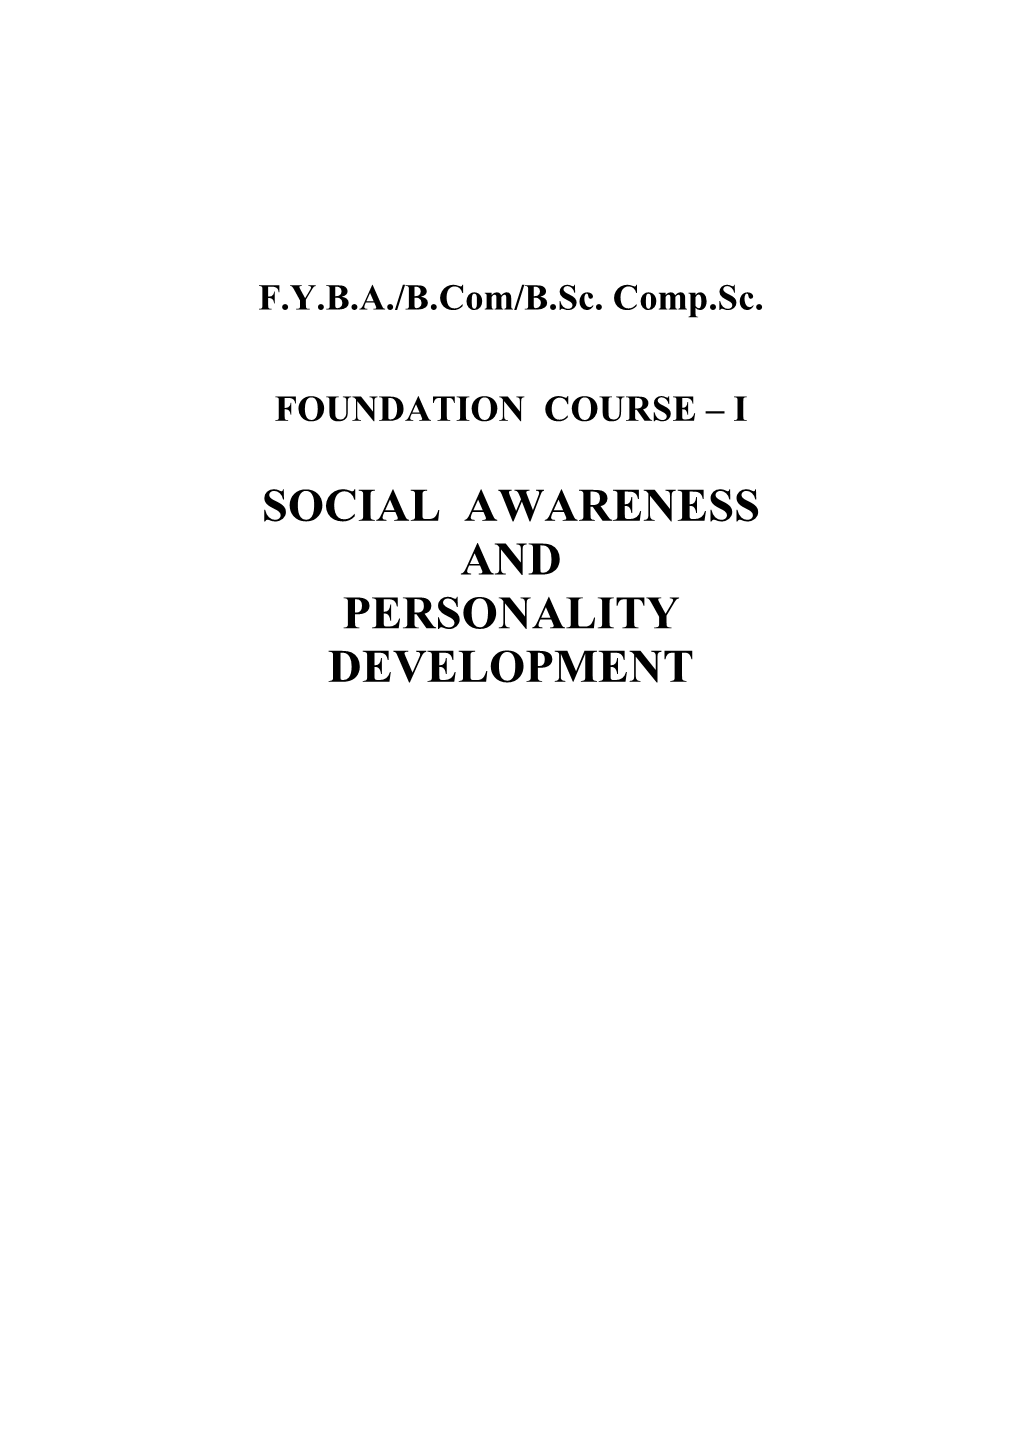 Foundation Course – I